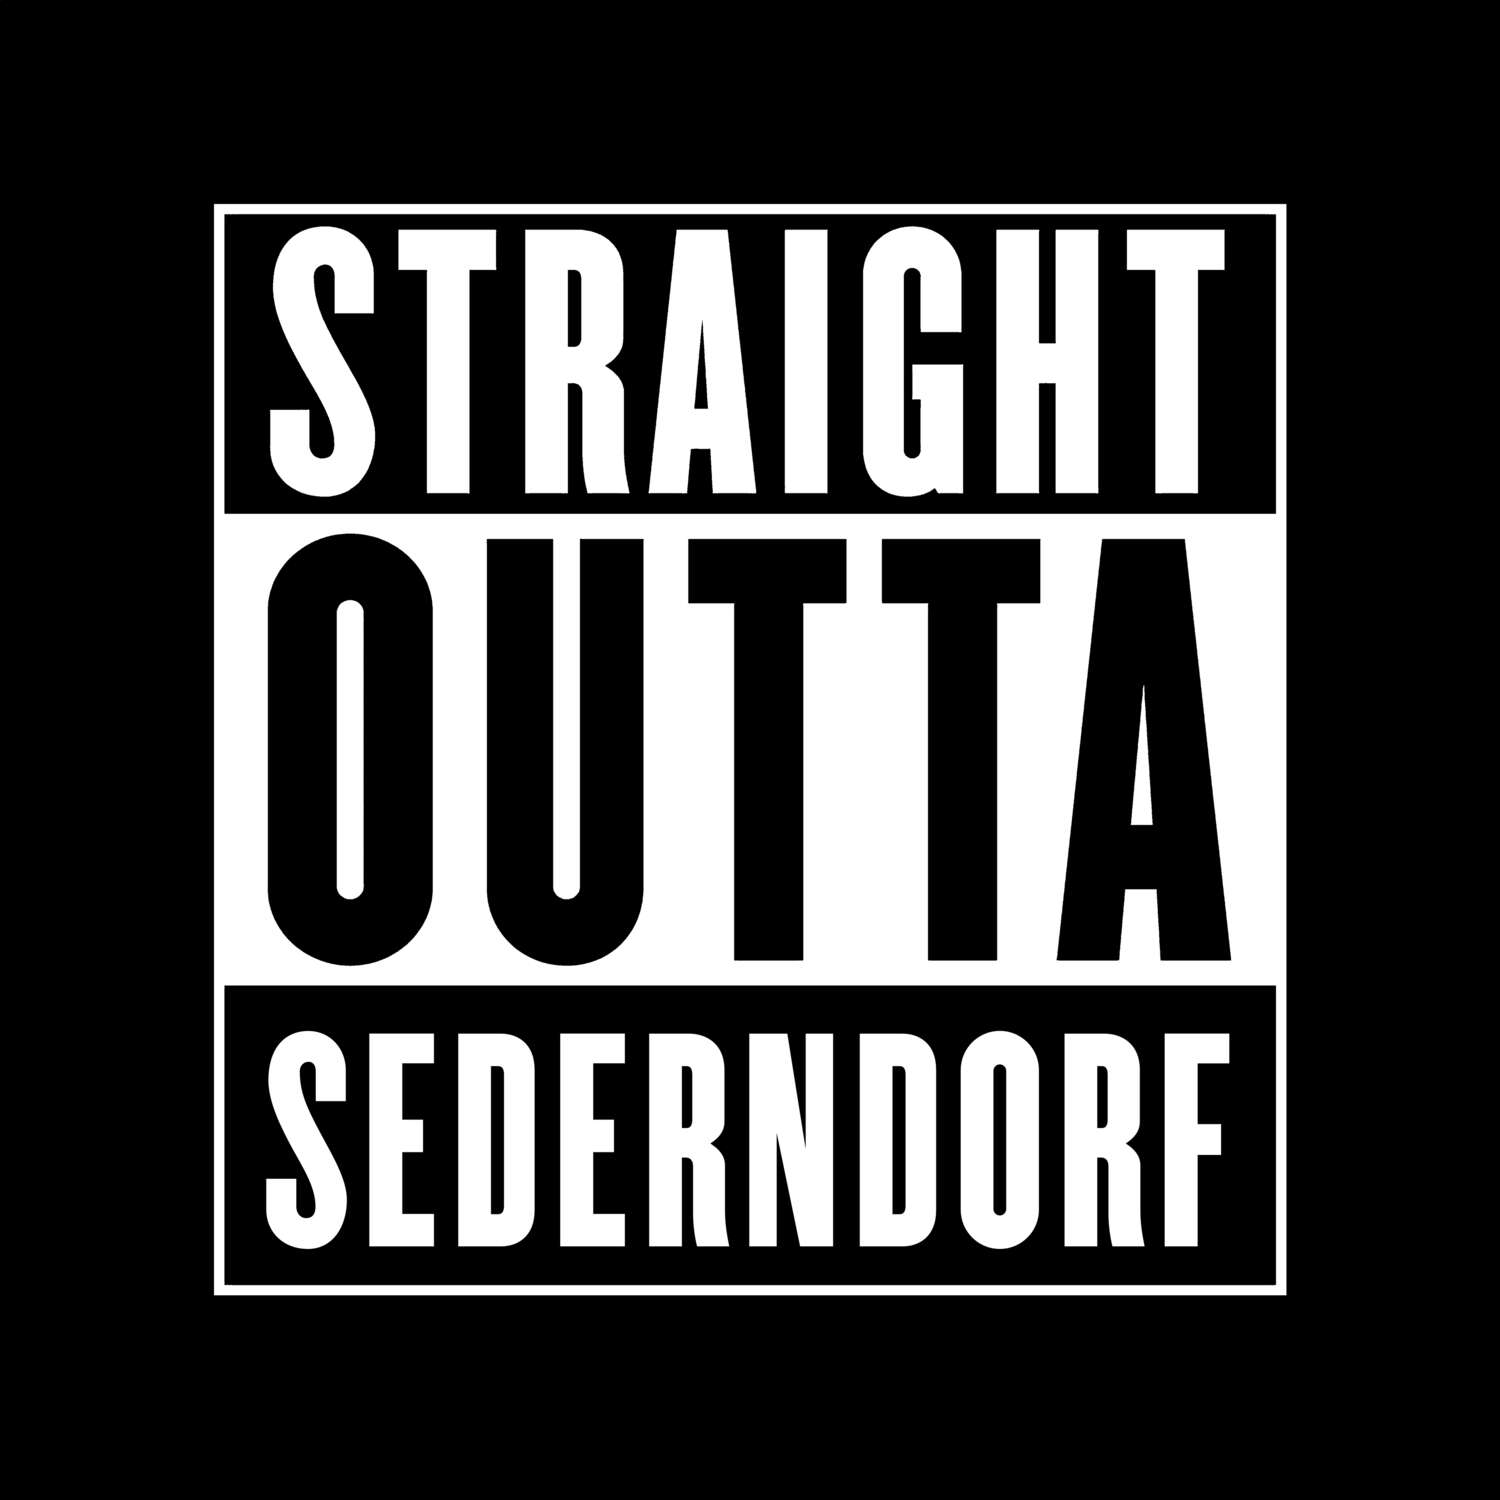 Sederndorf T-Shirt »Straight Outta«